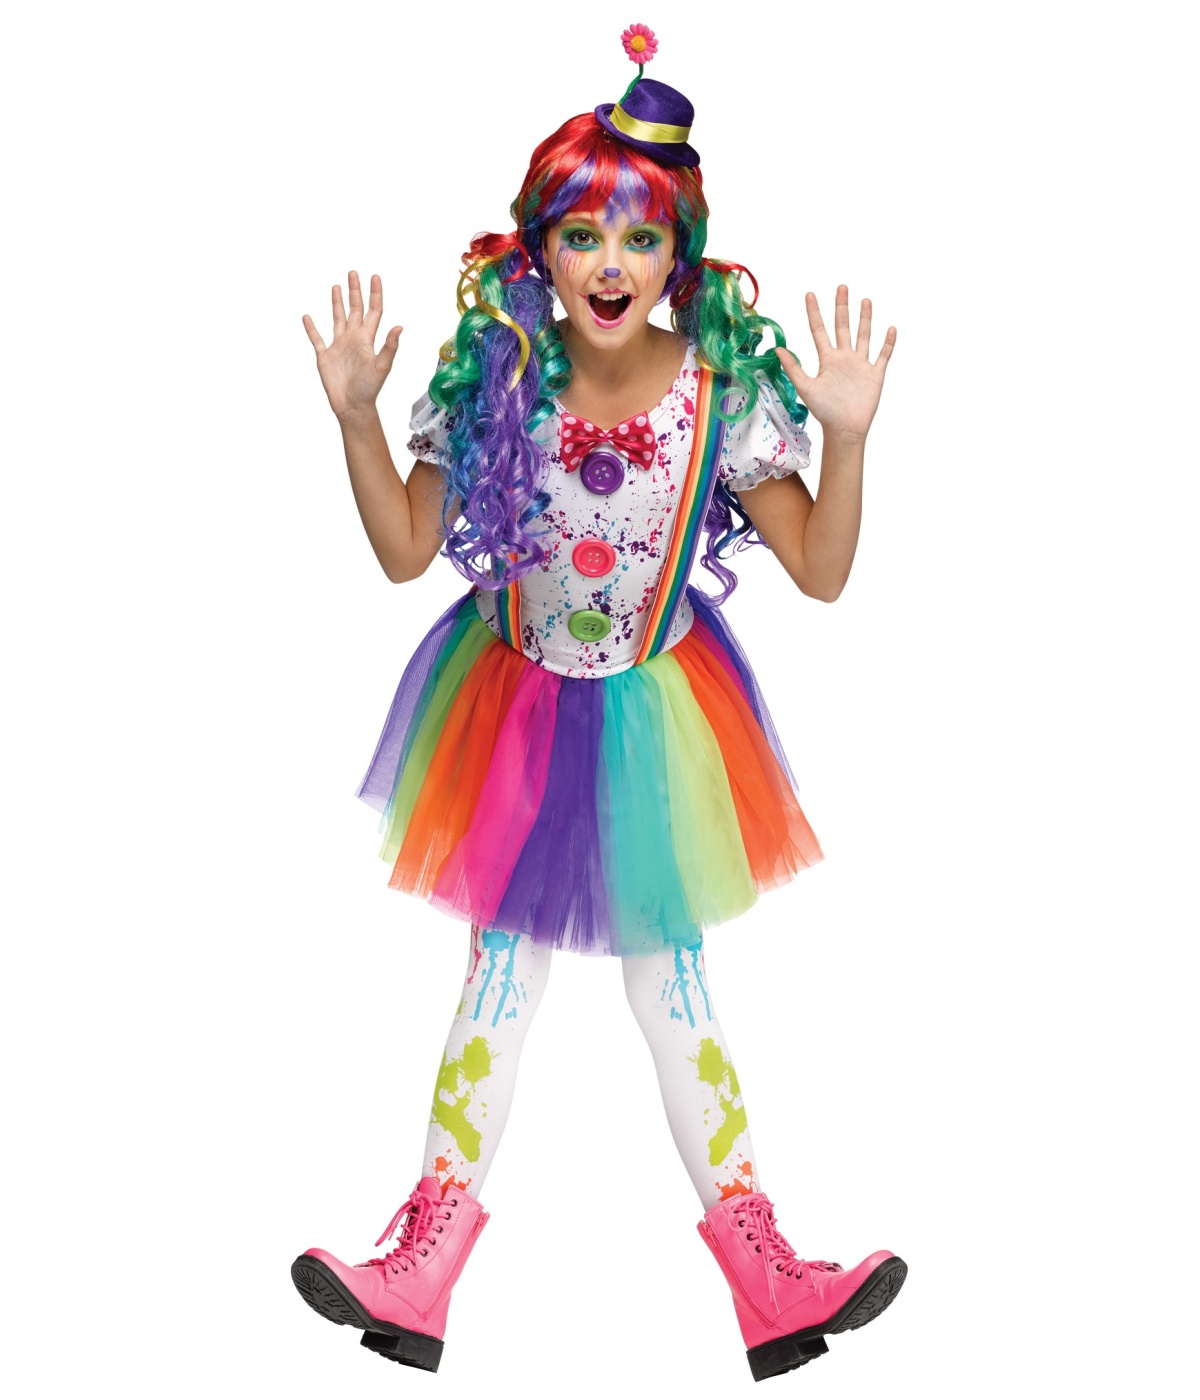  Girls Rainbow Color Clown Costume